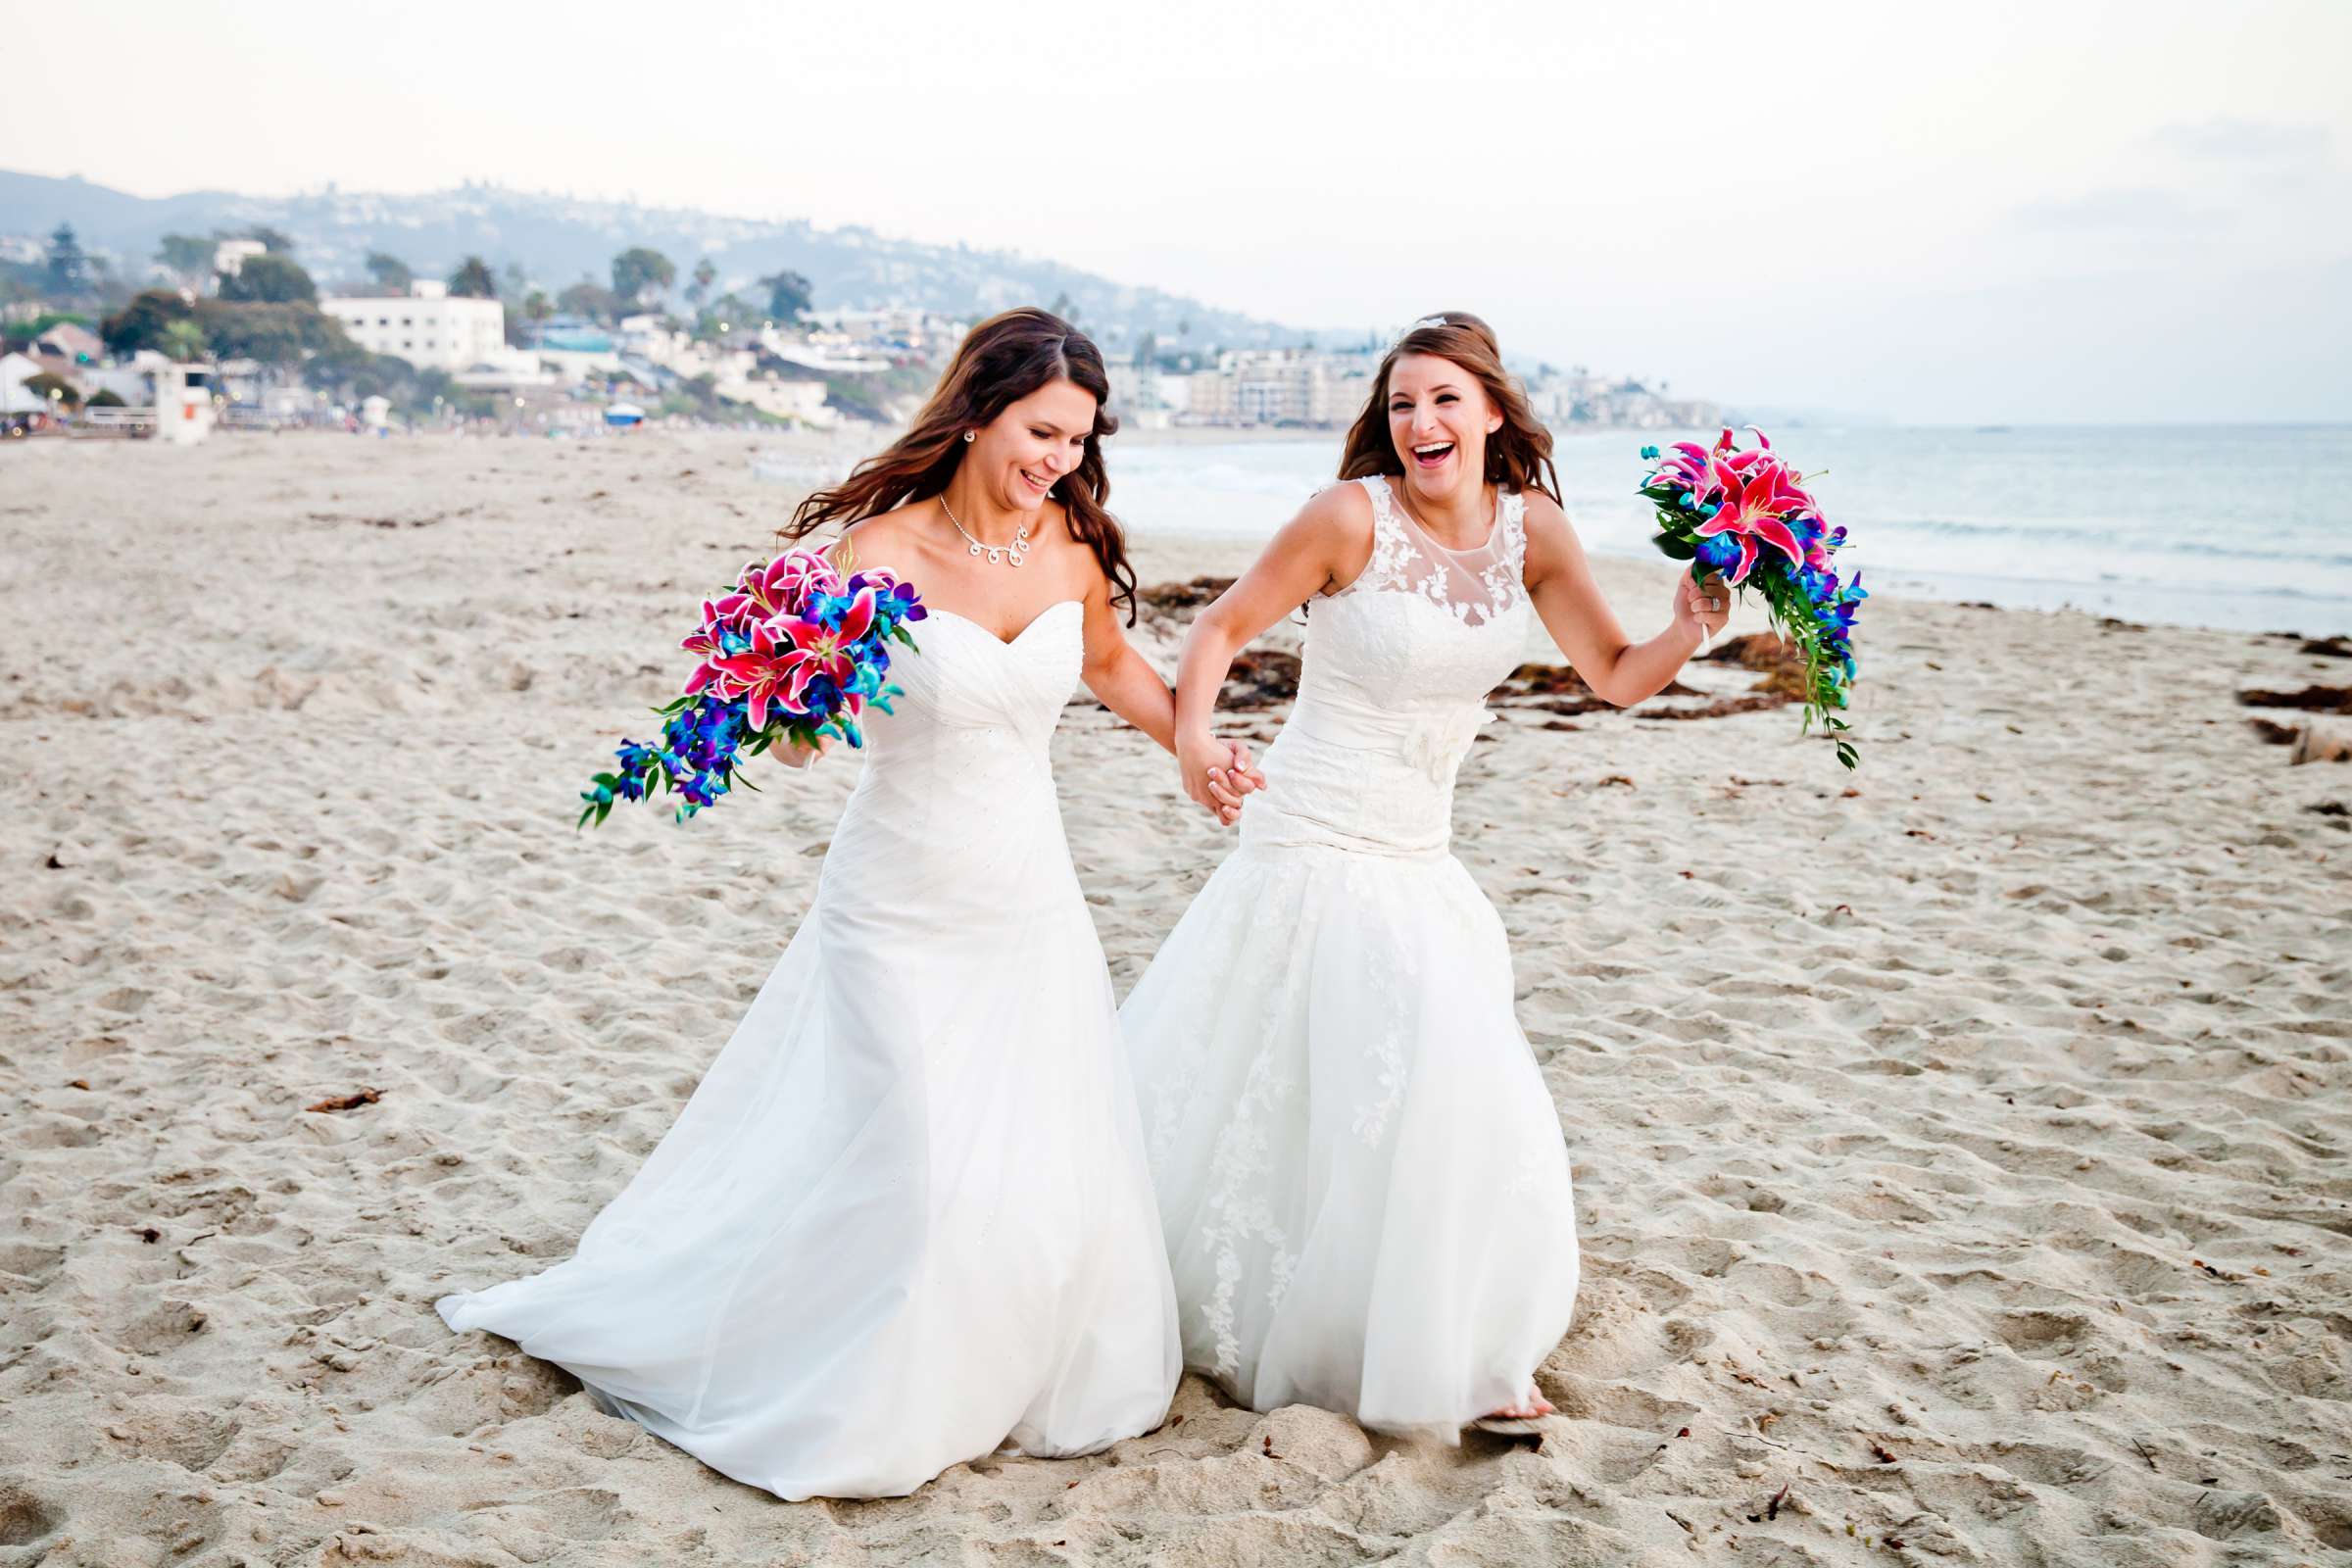 Inn at Laguna Beach Wedding, Madeline and Michelle Wedding Photo #8 by True Photography